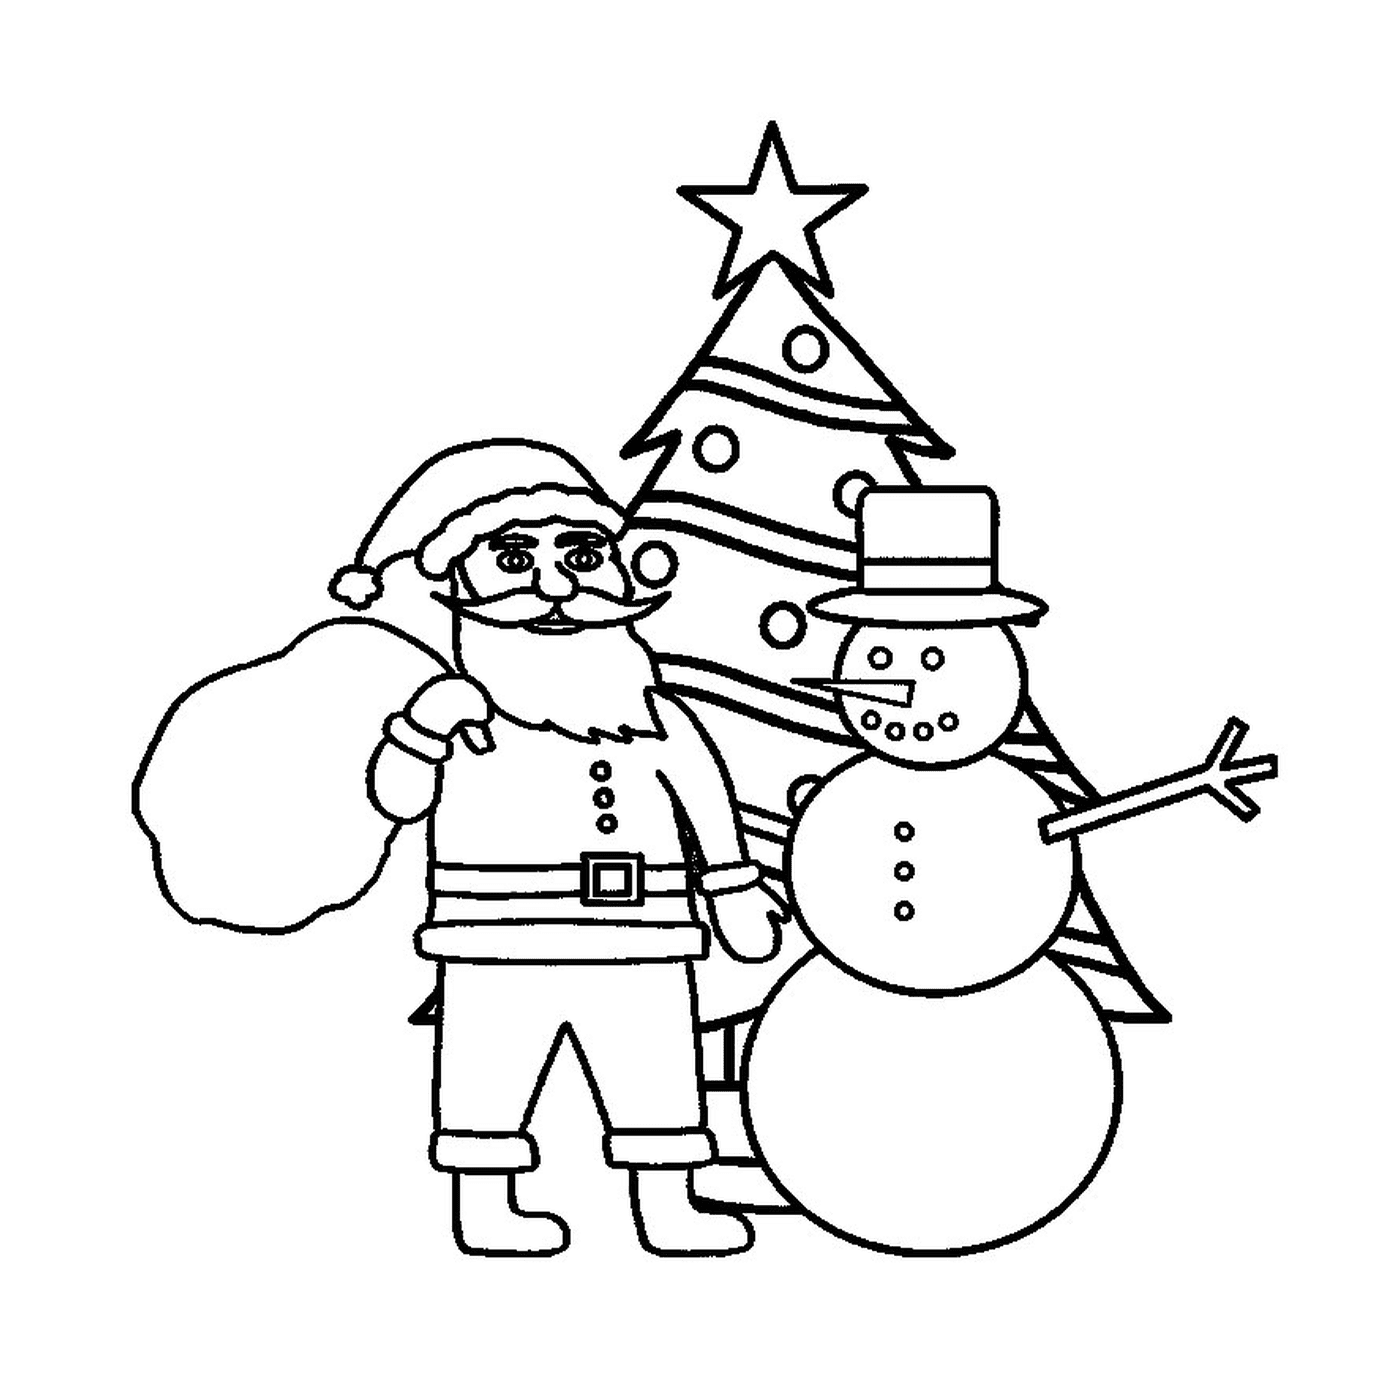  سانتا ورجل ثلجي 